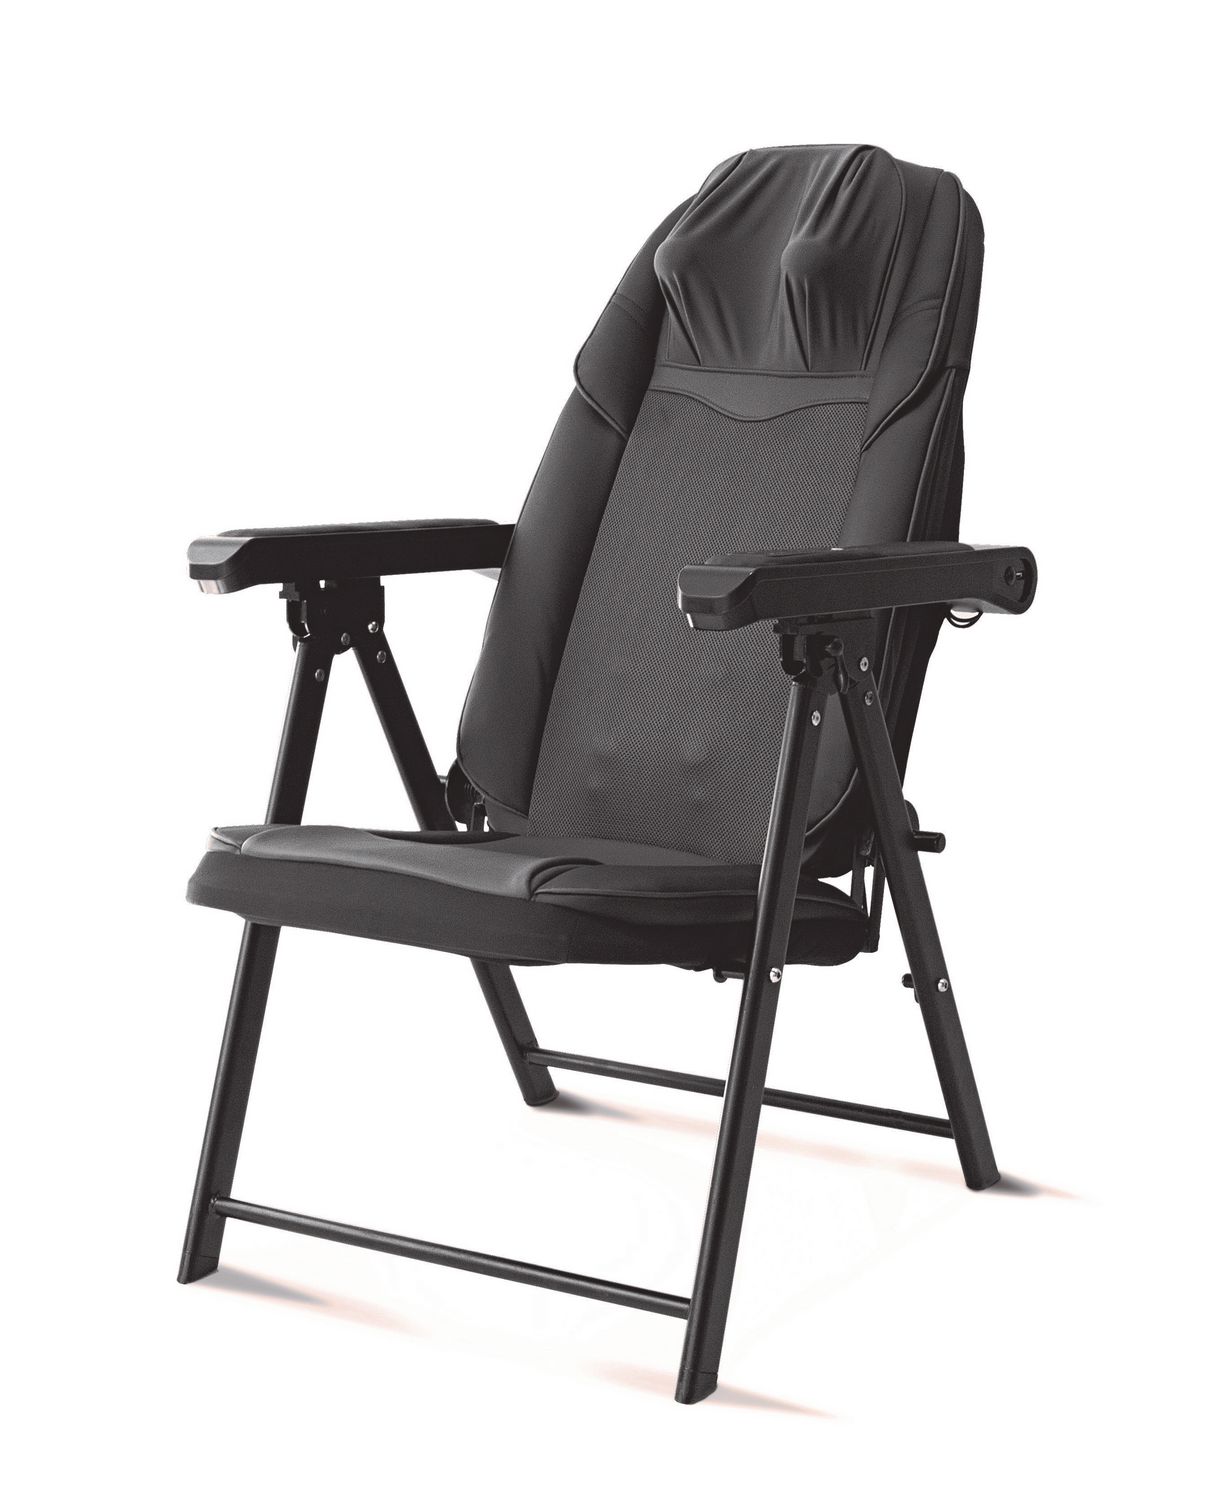 Sharper Image Portable Full Shiatsu Massage Chair Walmart Canada